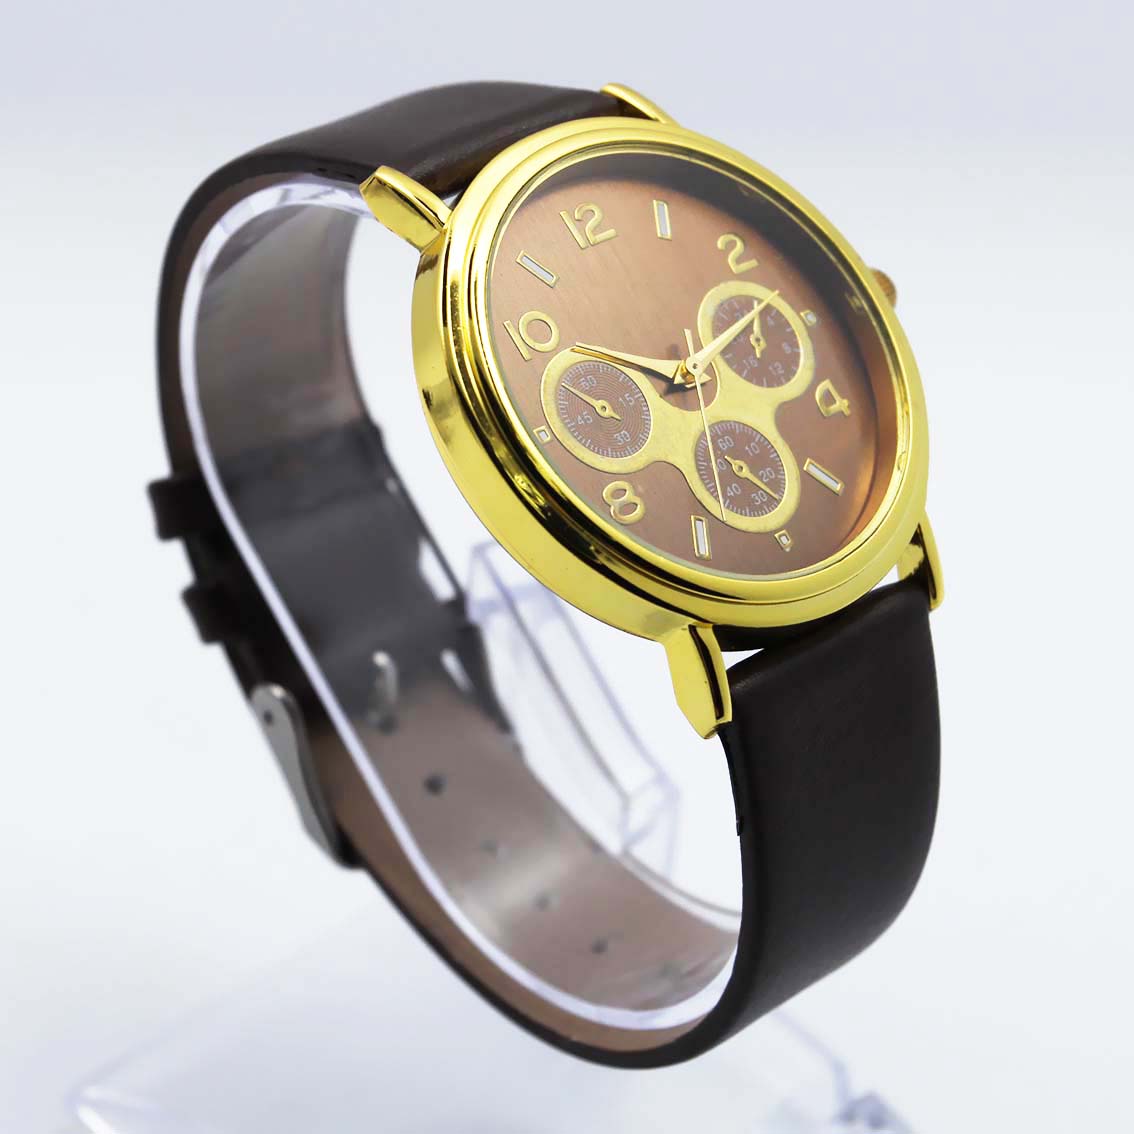 #02111Men's wristwatch quartz analog leather strap watch